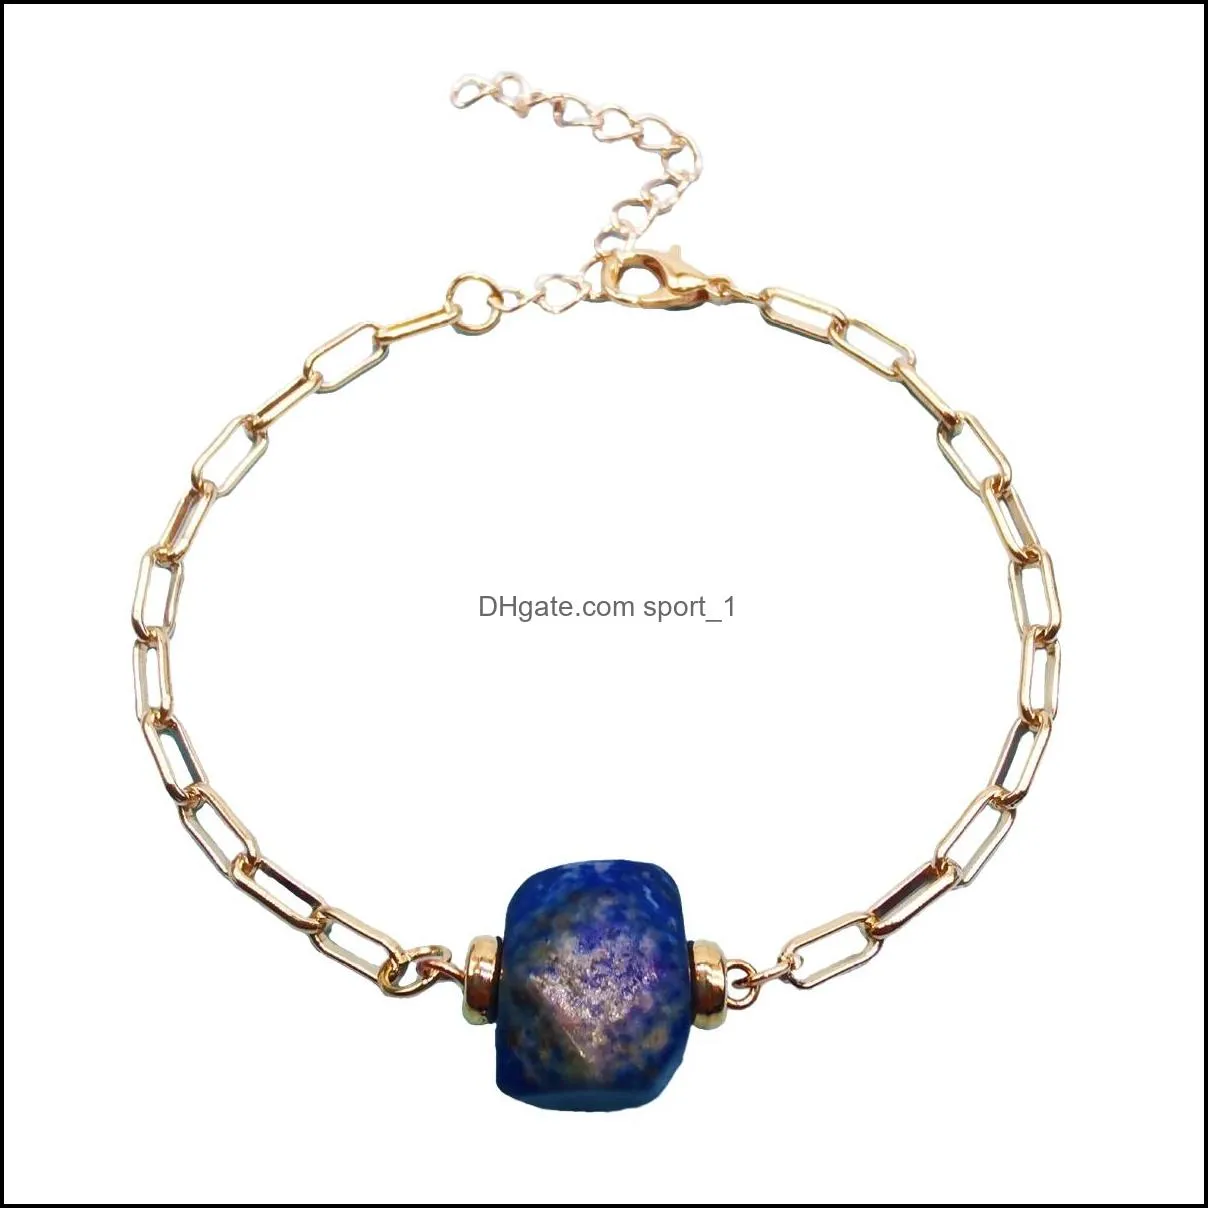 women chain bracelet diffuse energy healing chakra yoga cuff raw tumbled gemstone bangle rough original stone couple jewelry